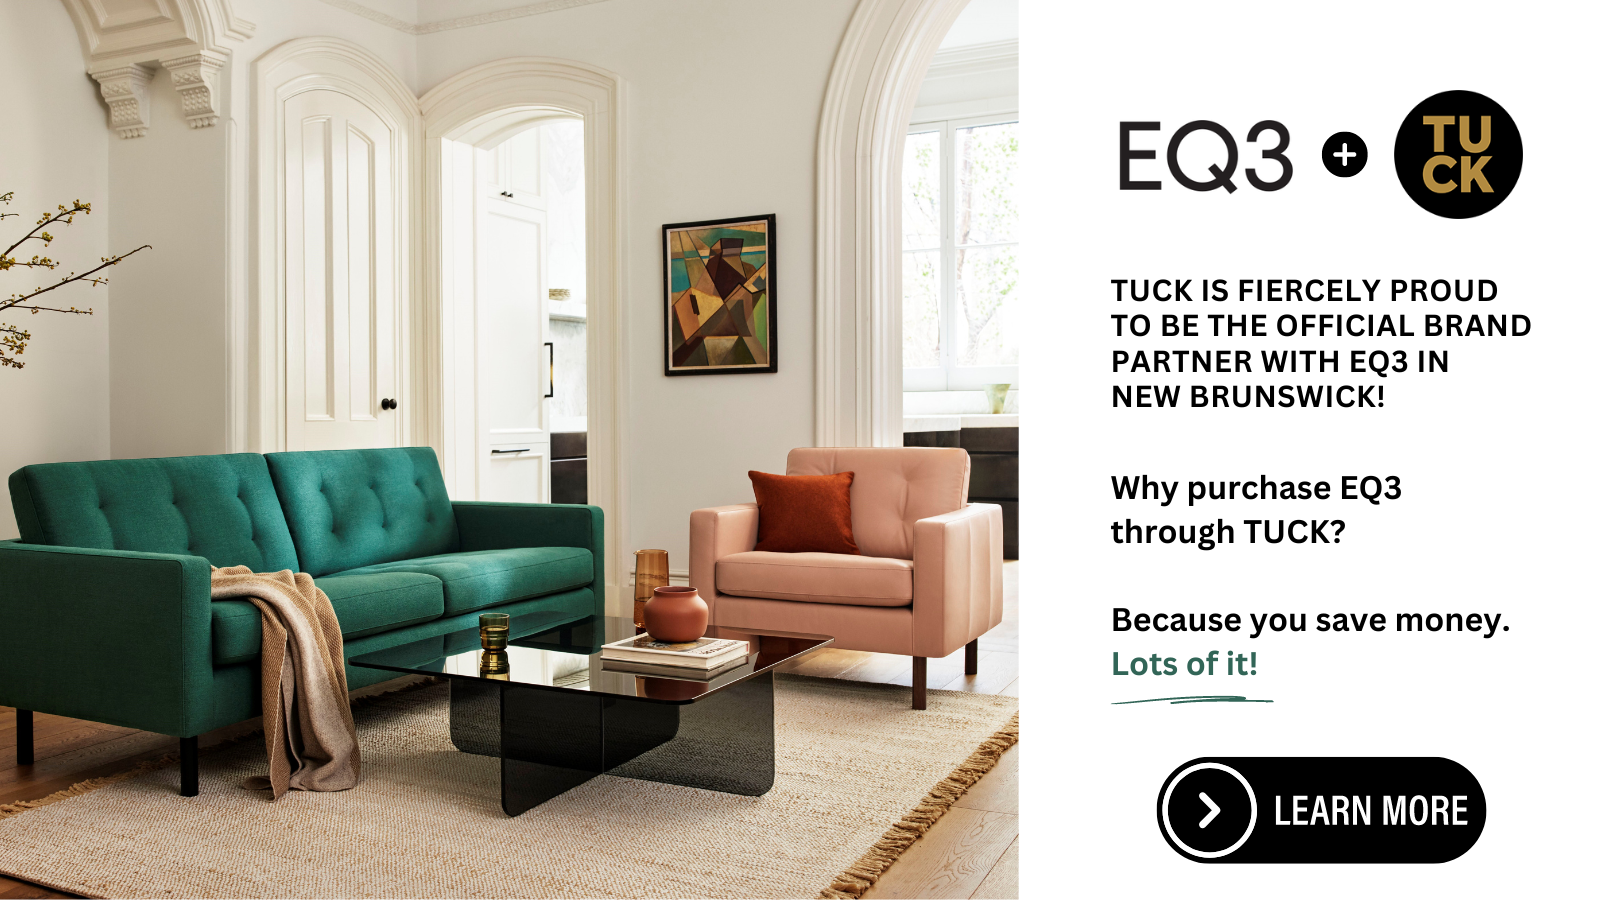 Purchase your EQ3 Sofa through Tuck & Save Money!